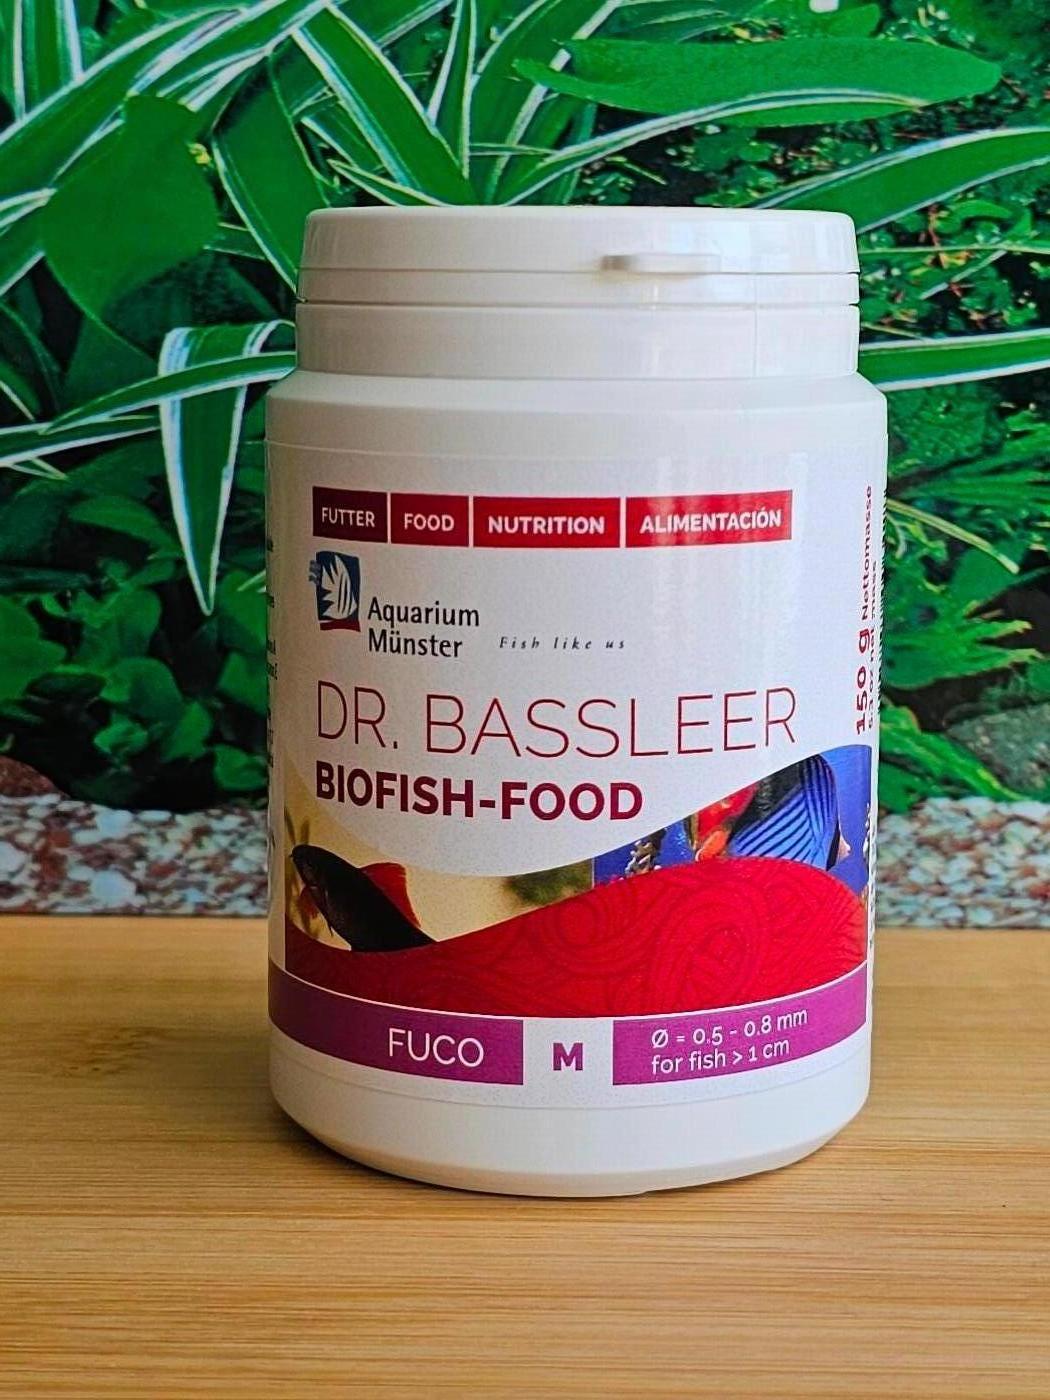 Dr. Bassleer Biofish-Food FUCO  150g-170g